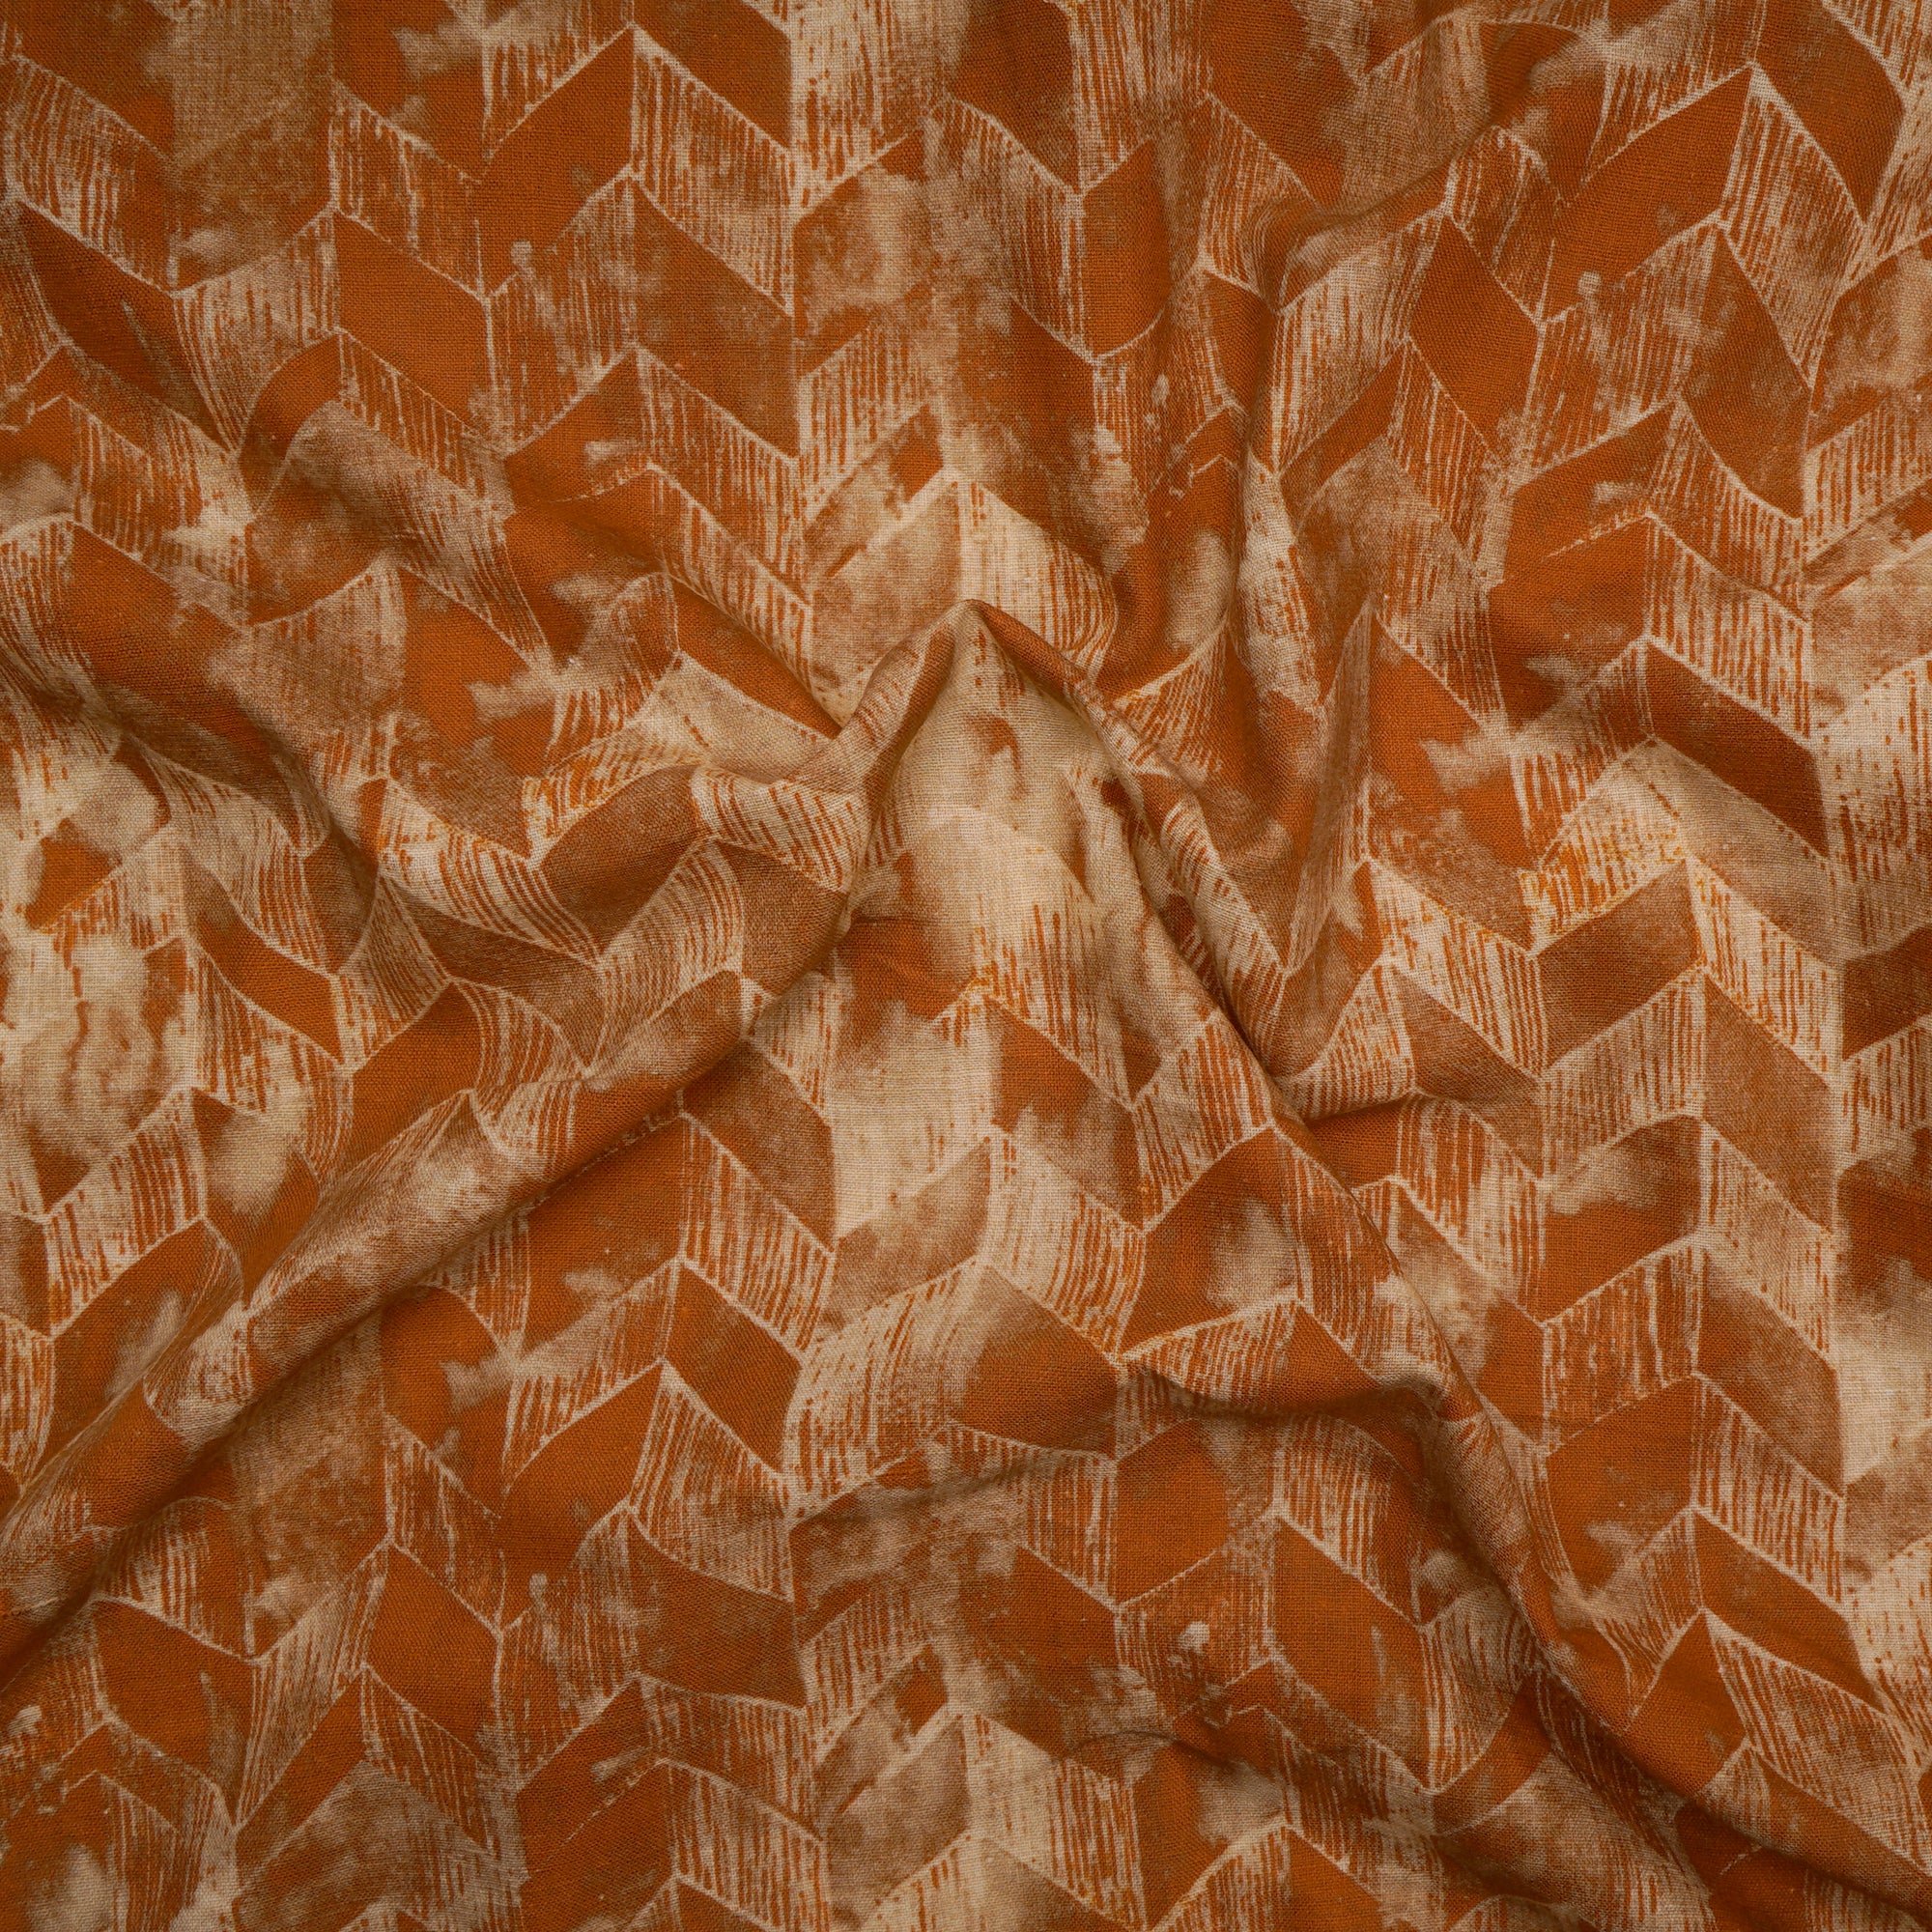 Rust Color Digital Printed Muslin Cotton Fabric